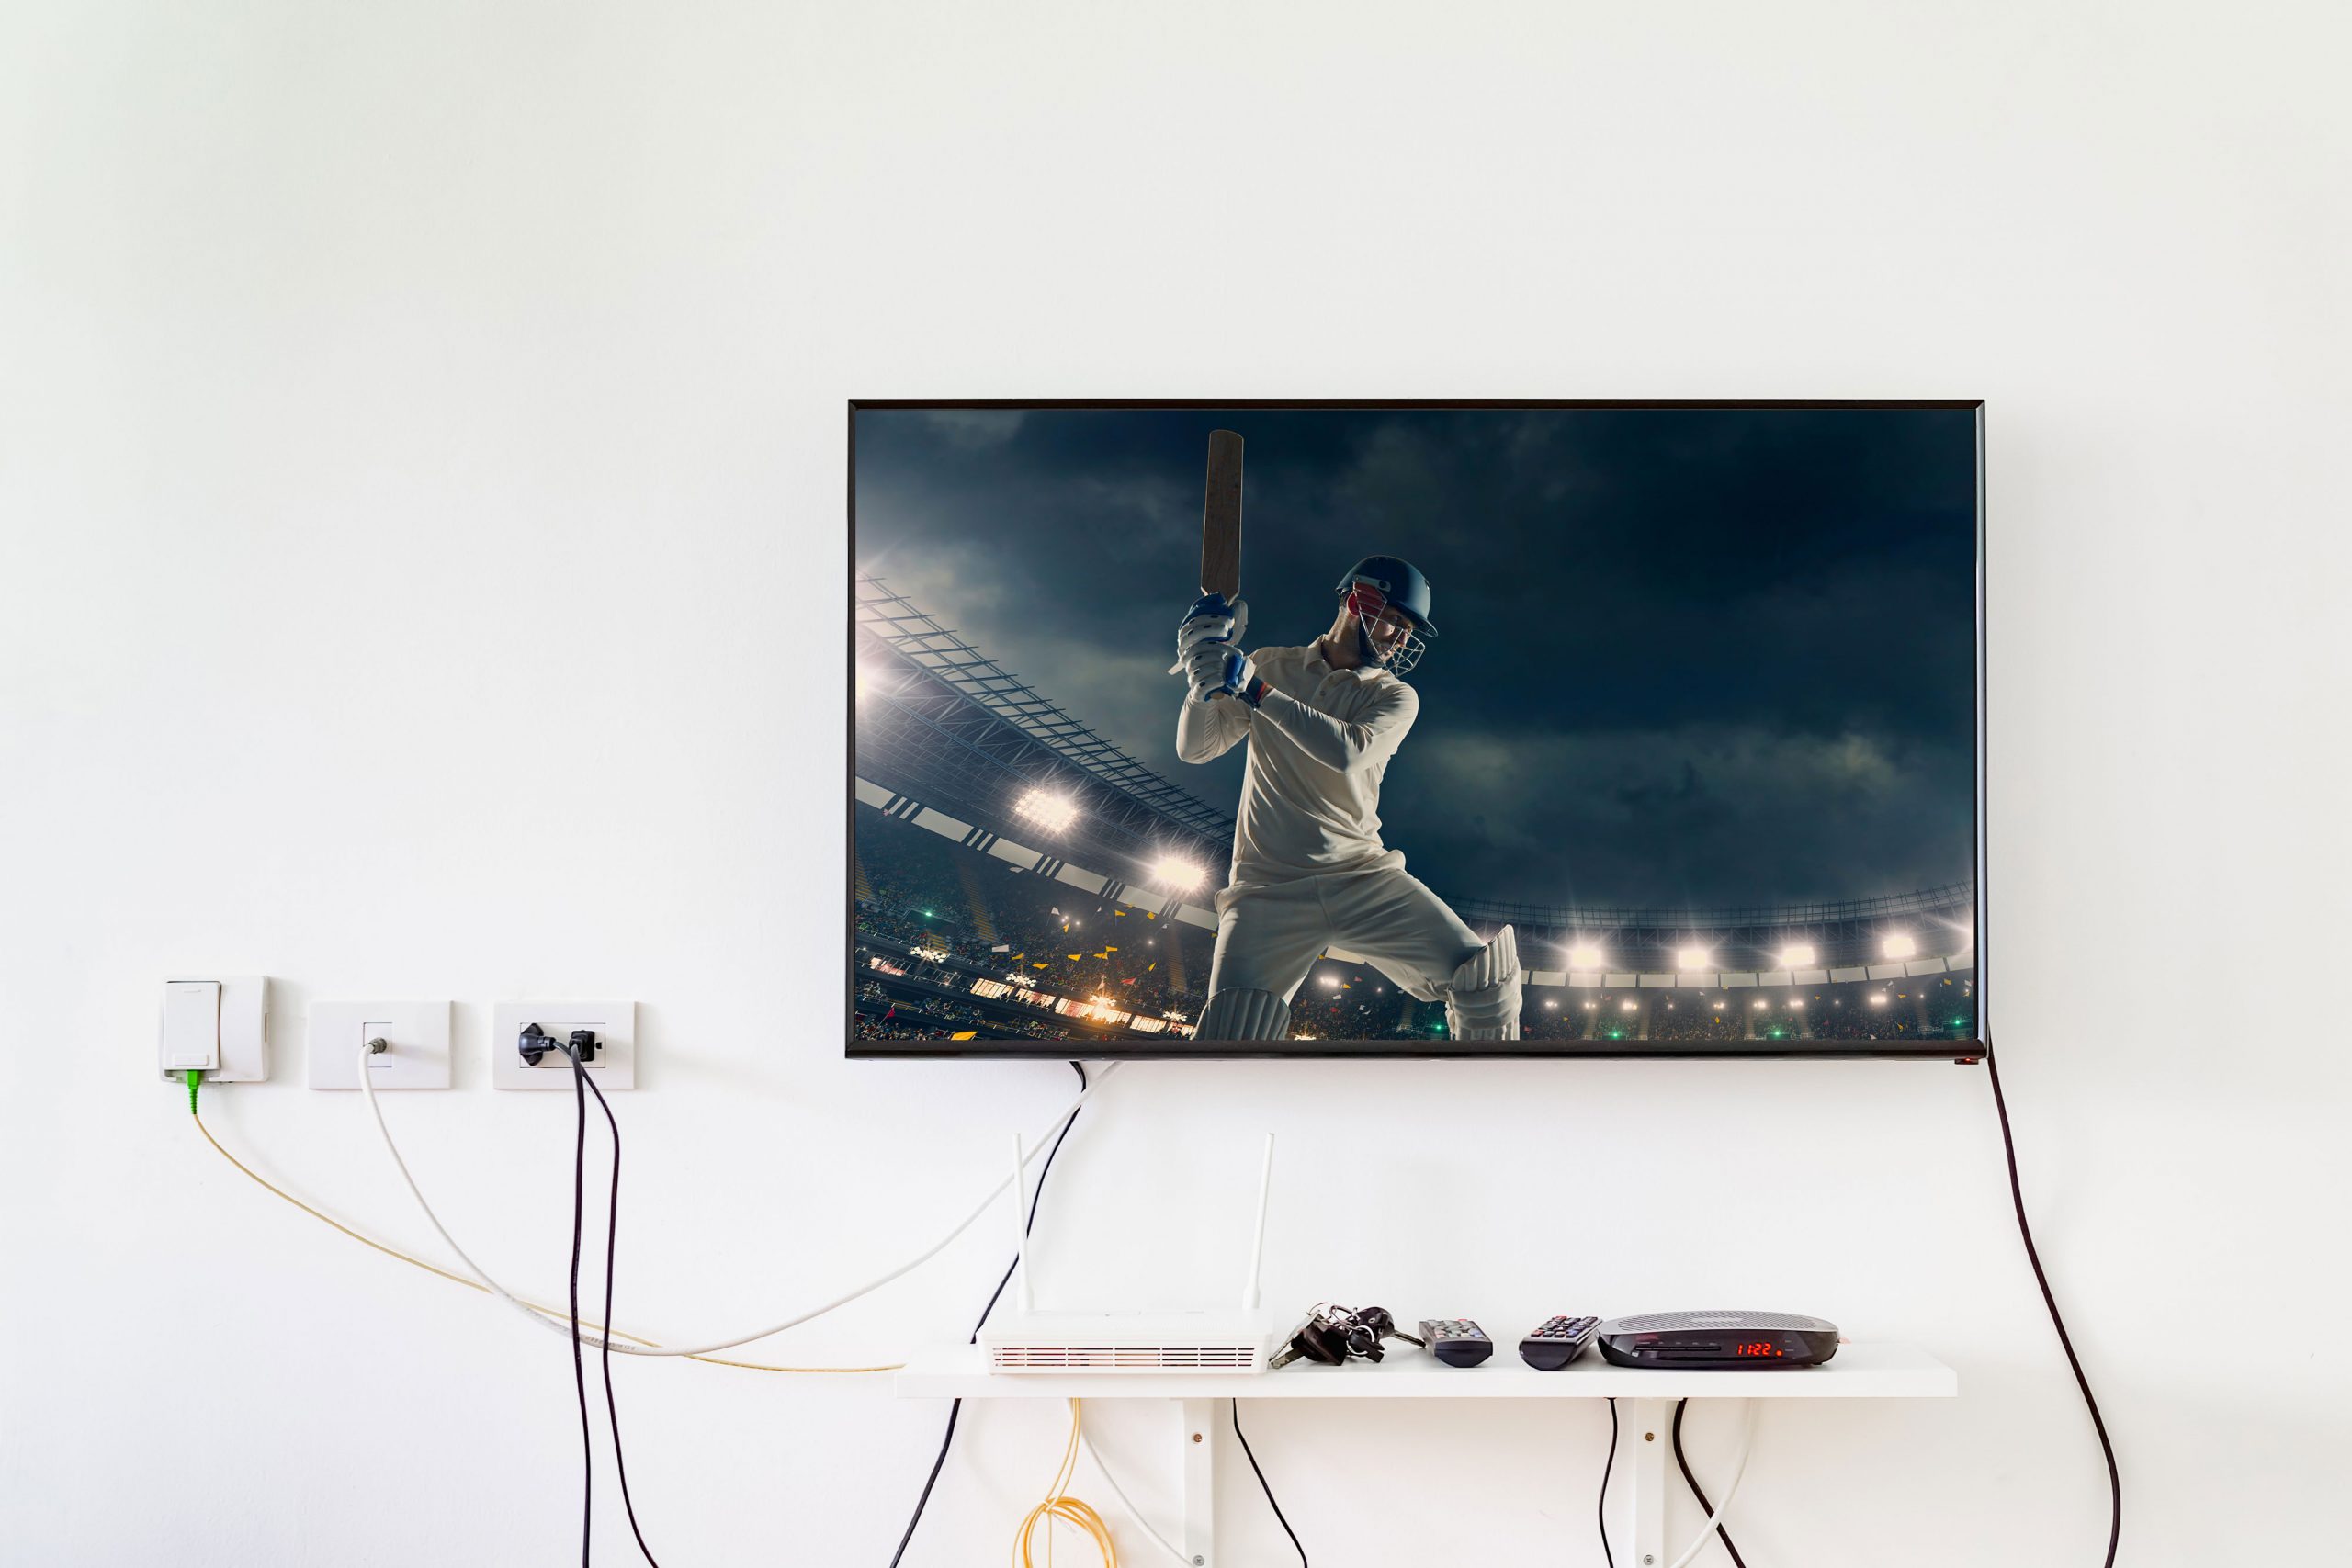 Buy Android TV Box - Smart TV Set Top Box with Price - Airtel Xstream